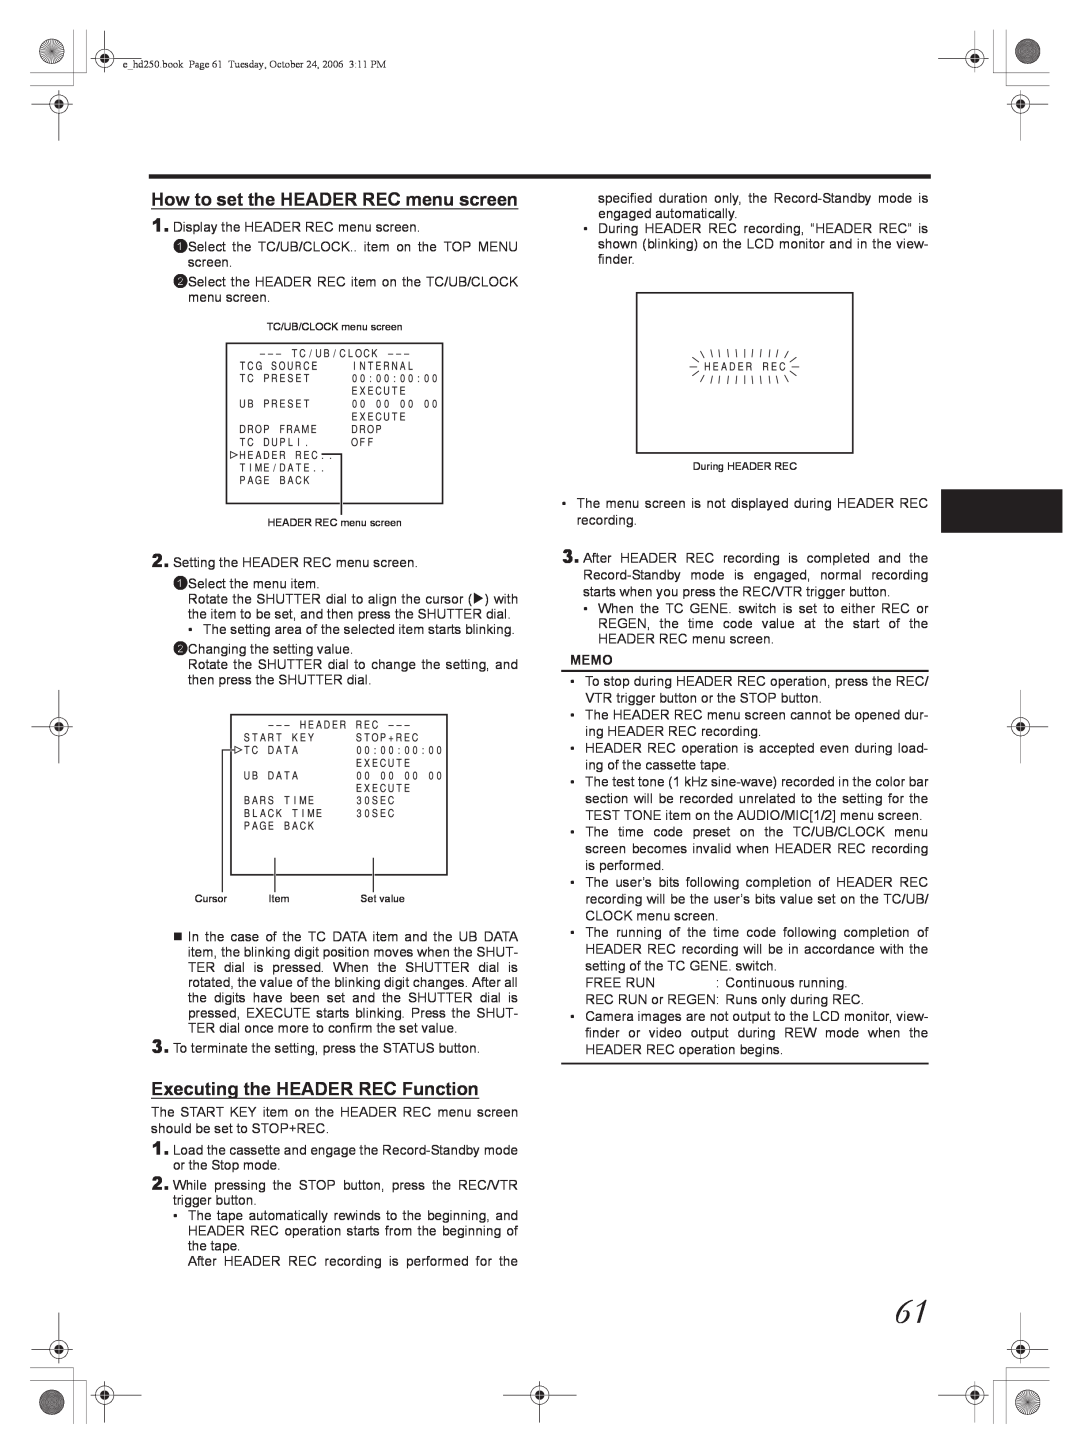 JVC GY-HD251, GY-HD250 manual How to set the HEADER REC menu screen, Executing the HEADER REC Function, Memo 